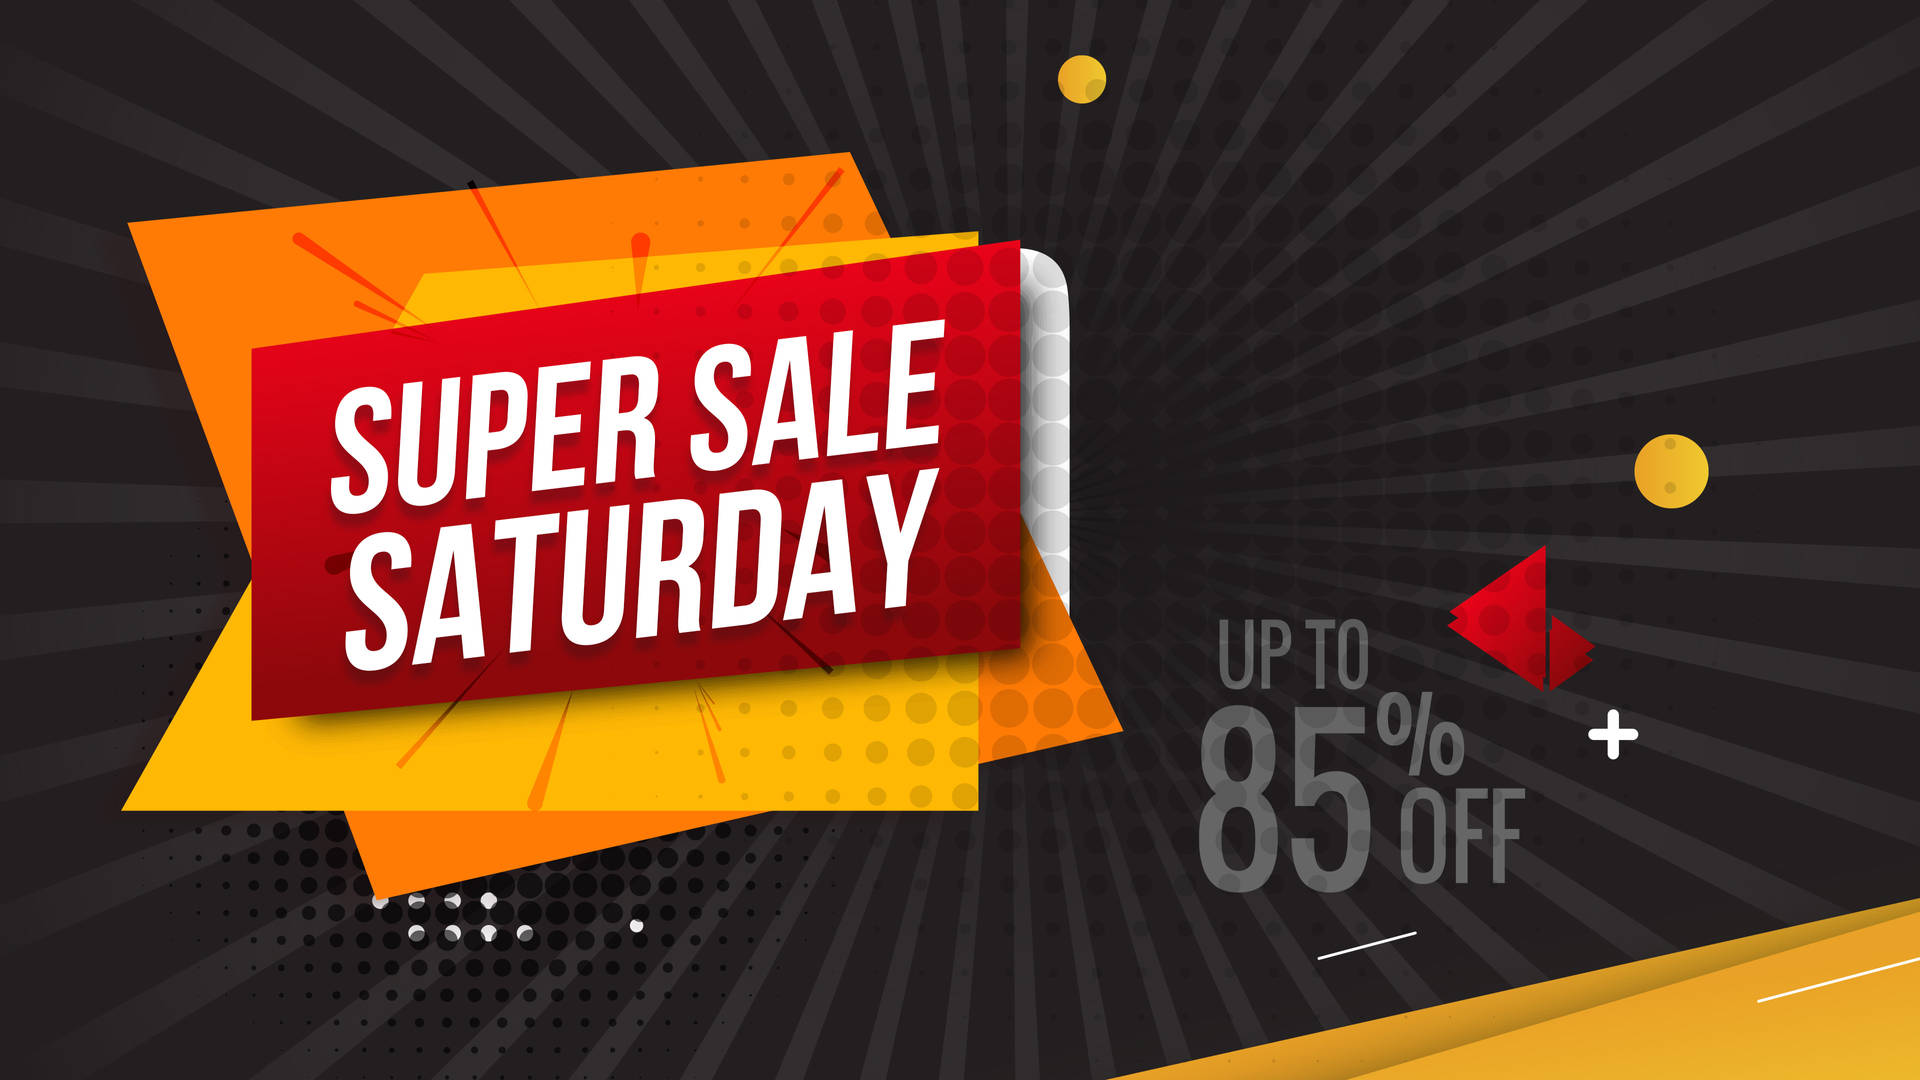 Super Saturday Sale With 85% Off